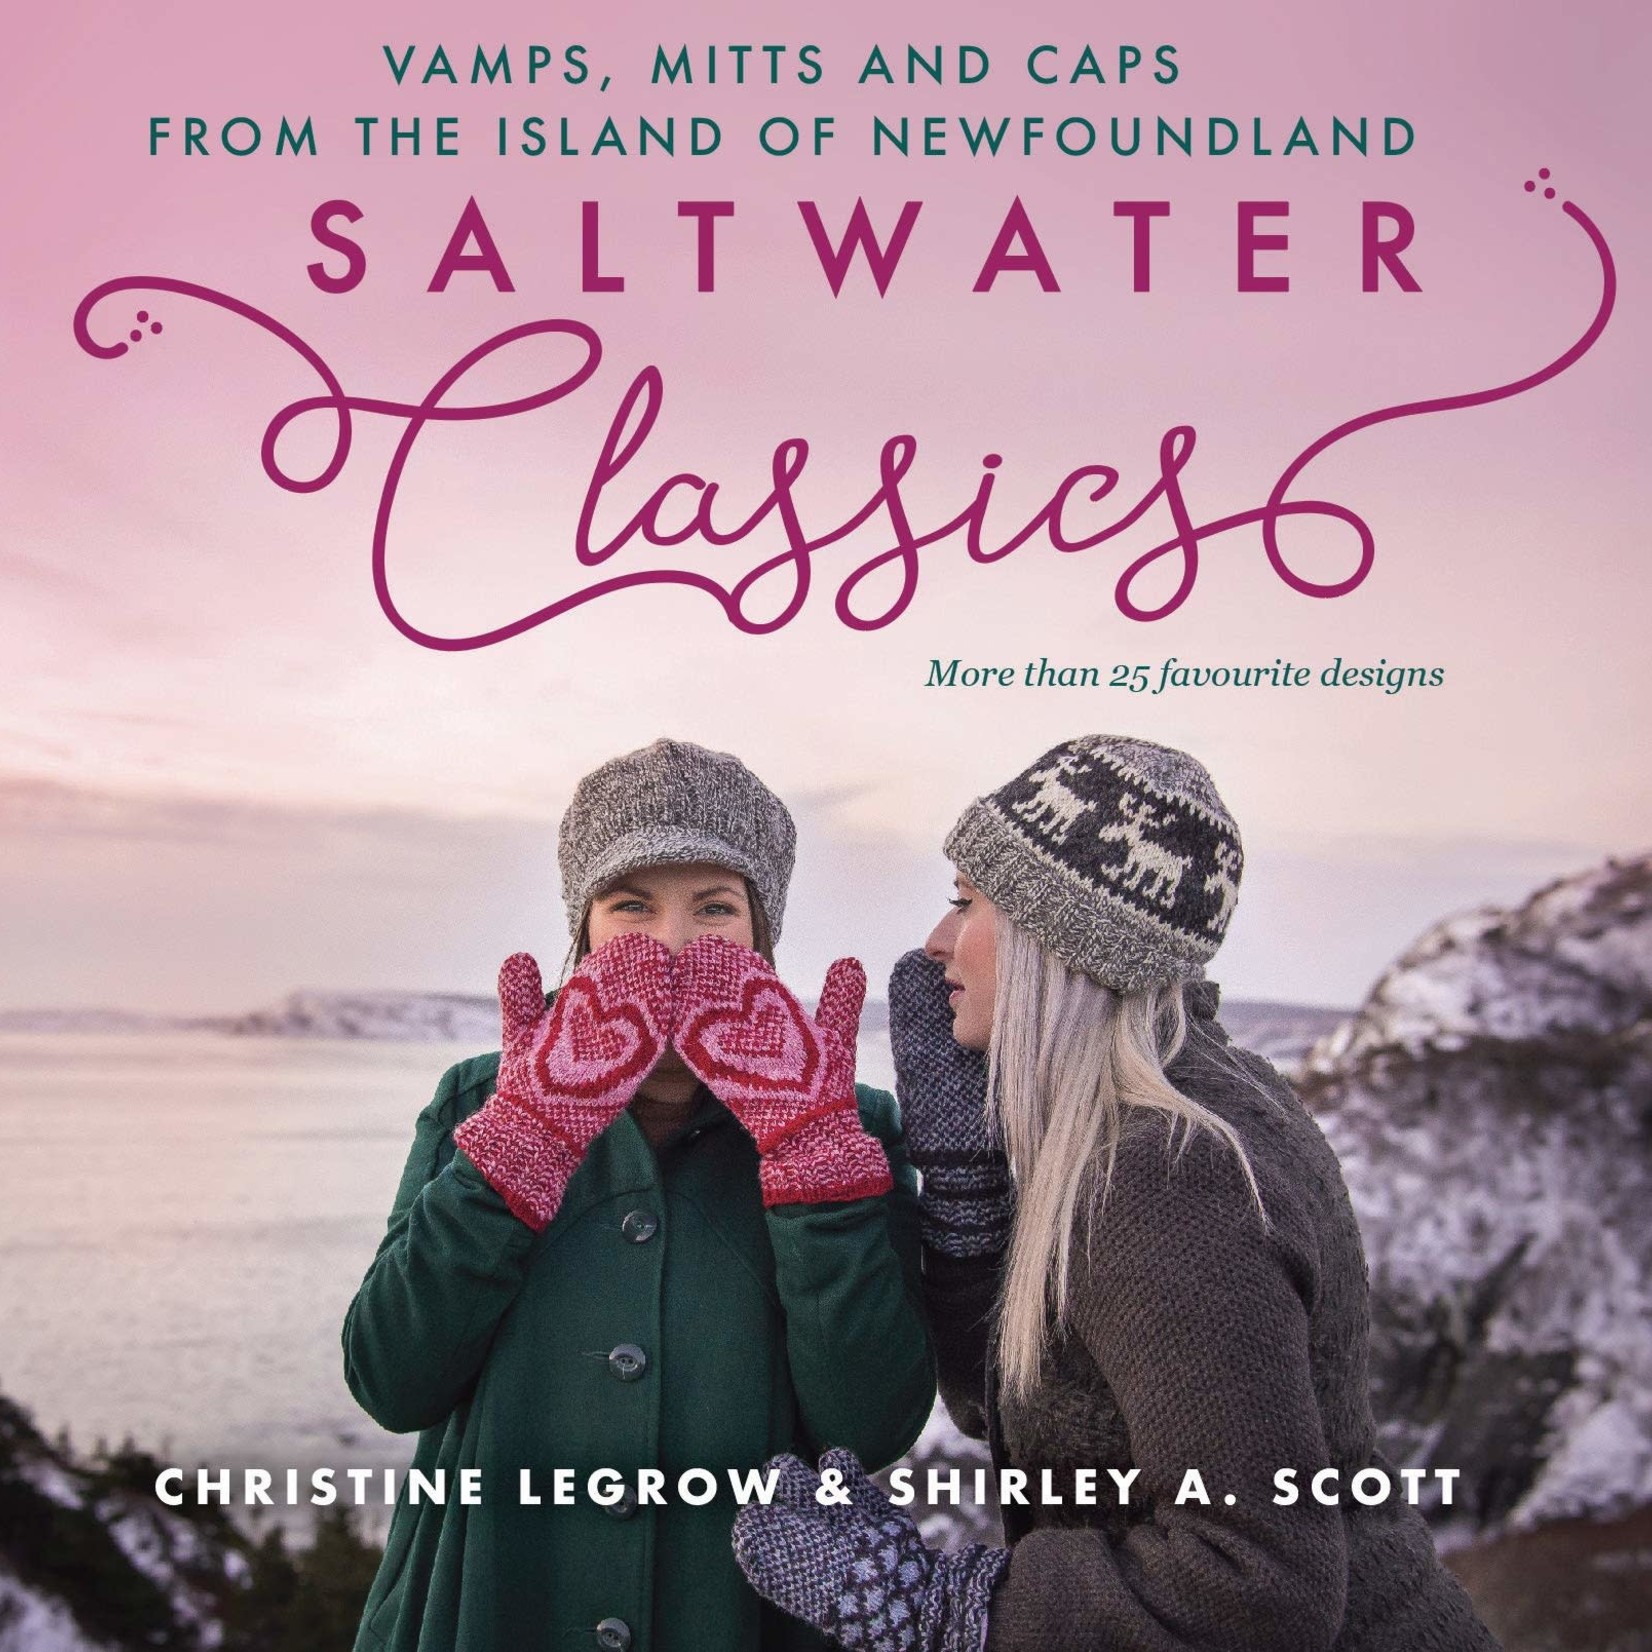 Book - Saltwater CLASSICS